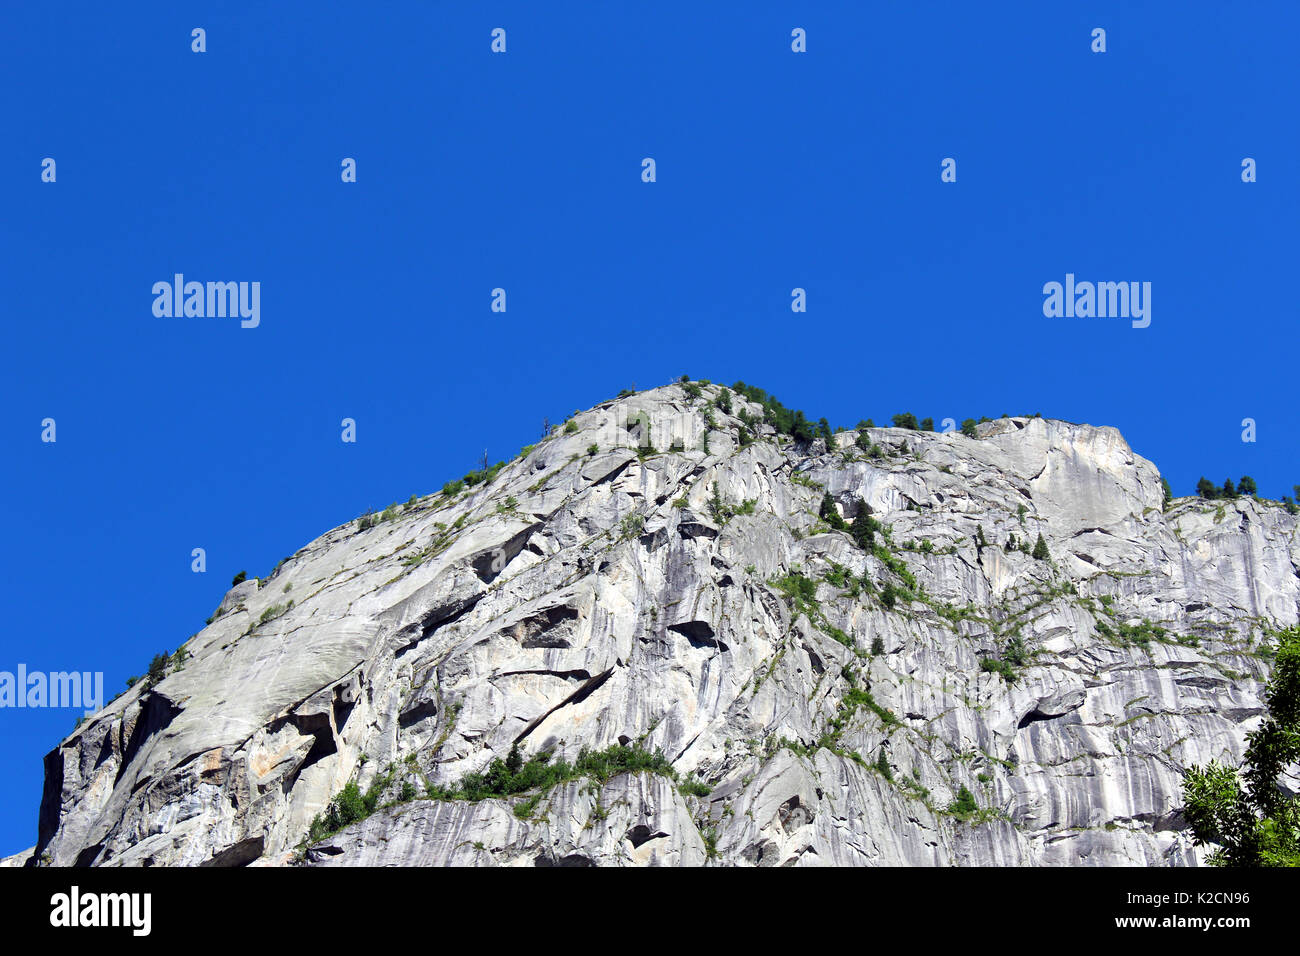 Granite rocks mountain walls in an alpine valley (Val di Mello batholith) Italy Stock Photo